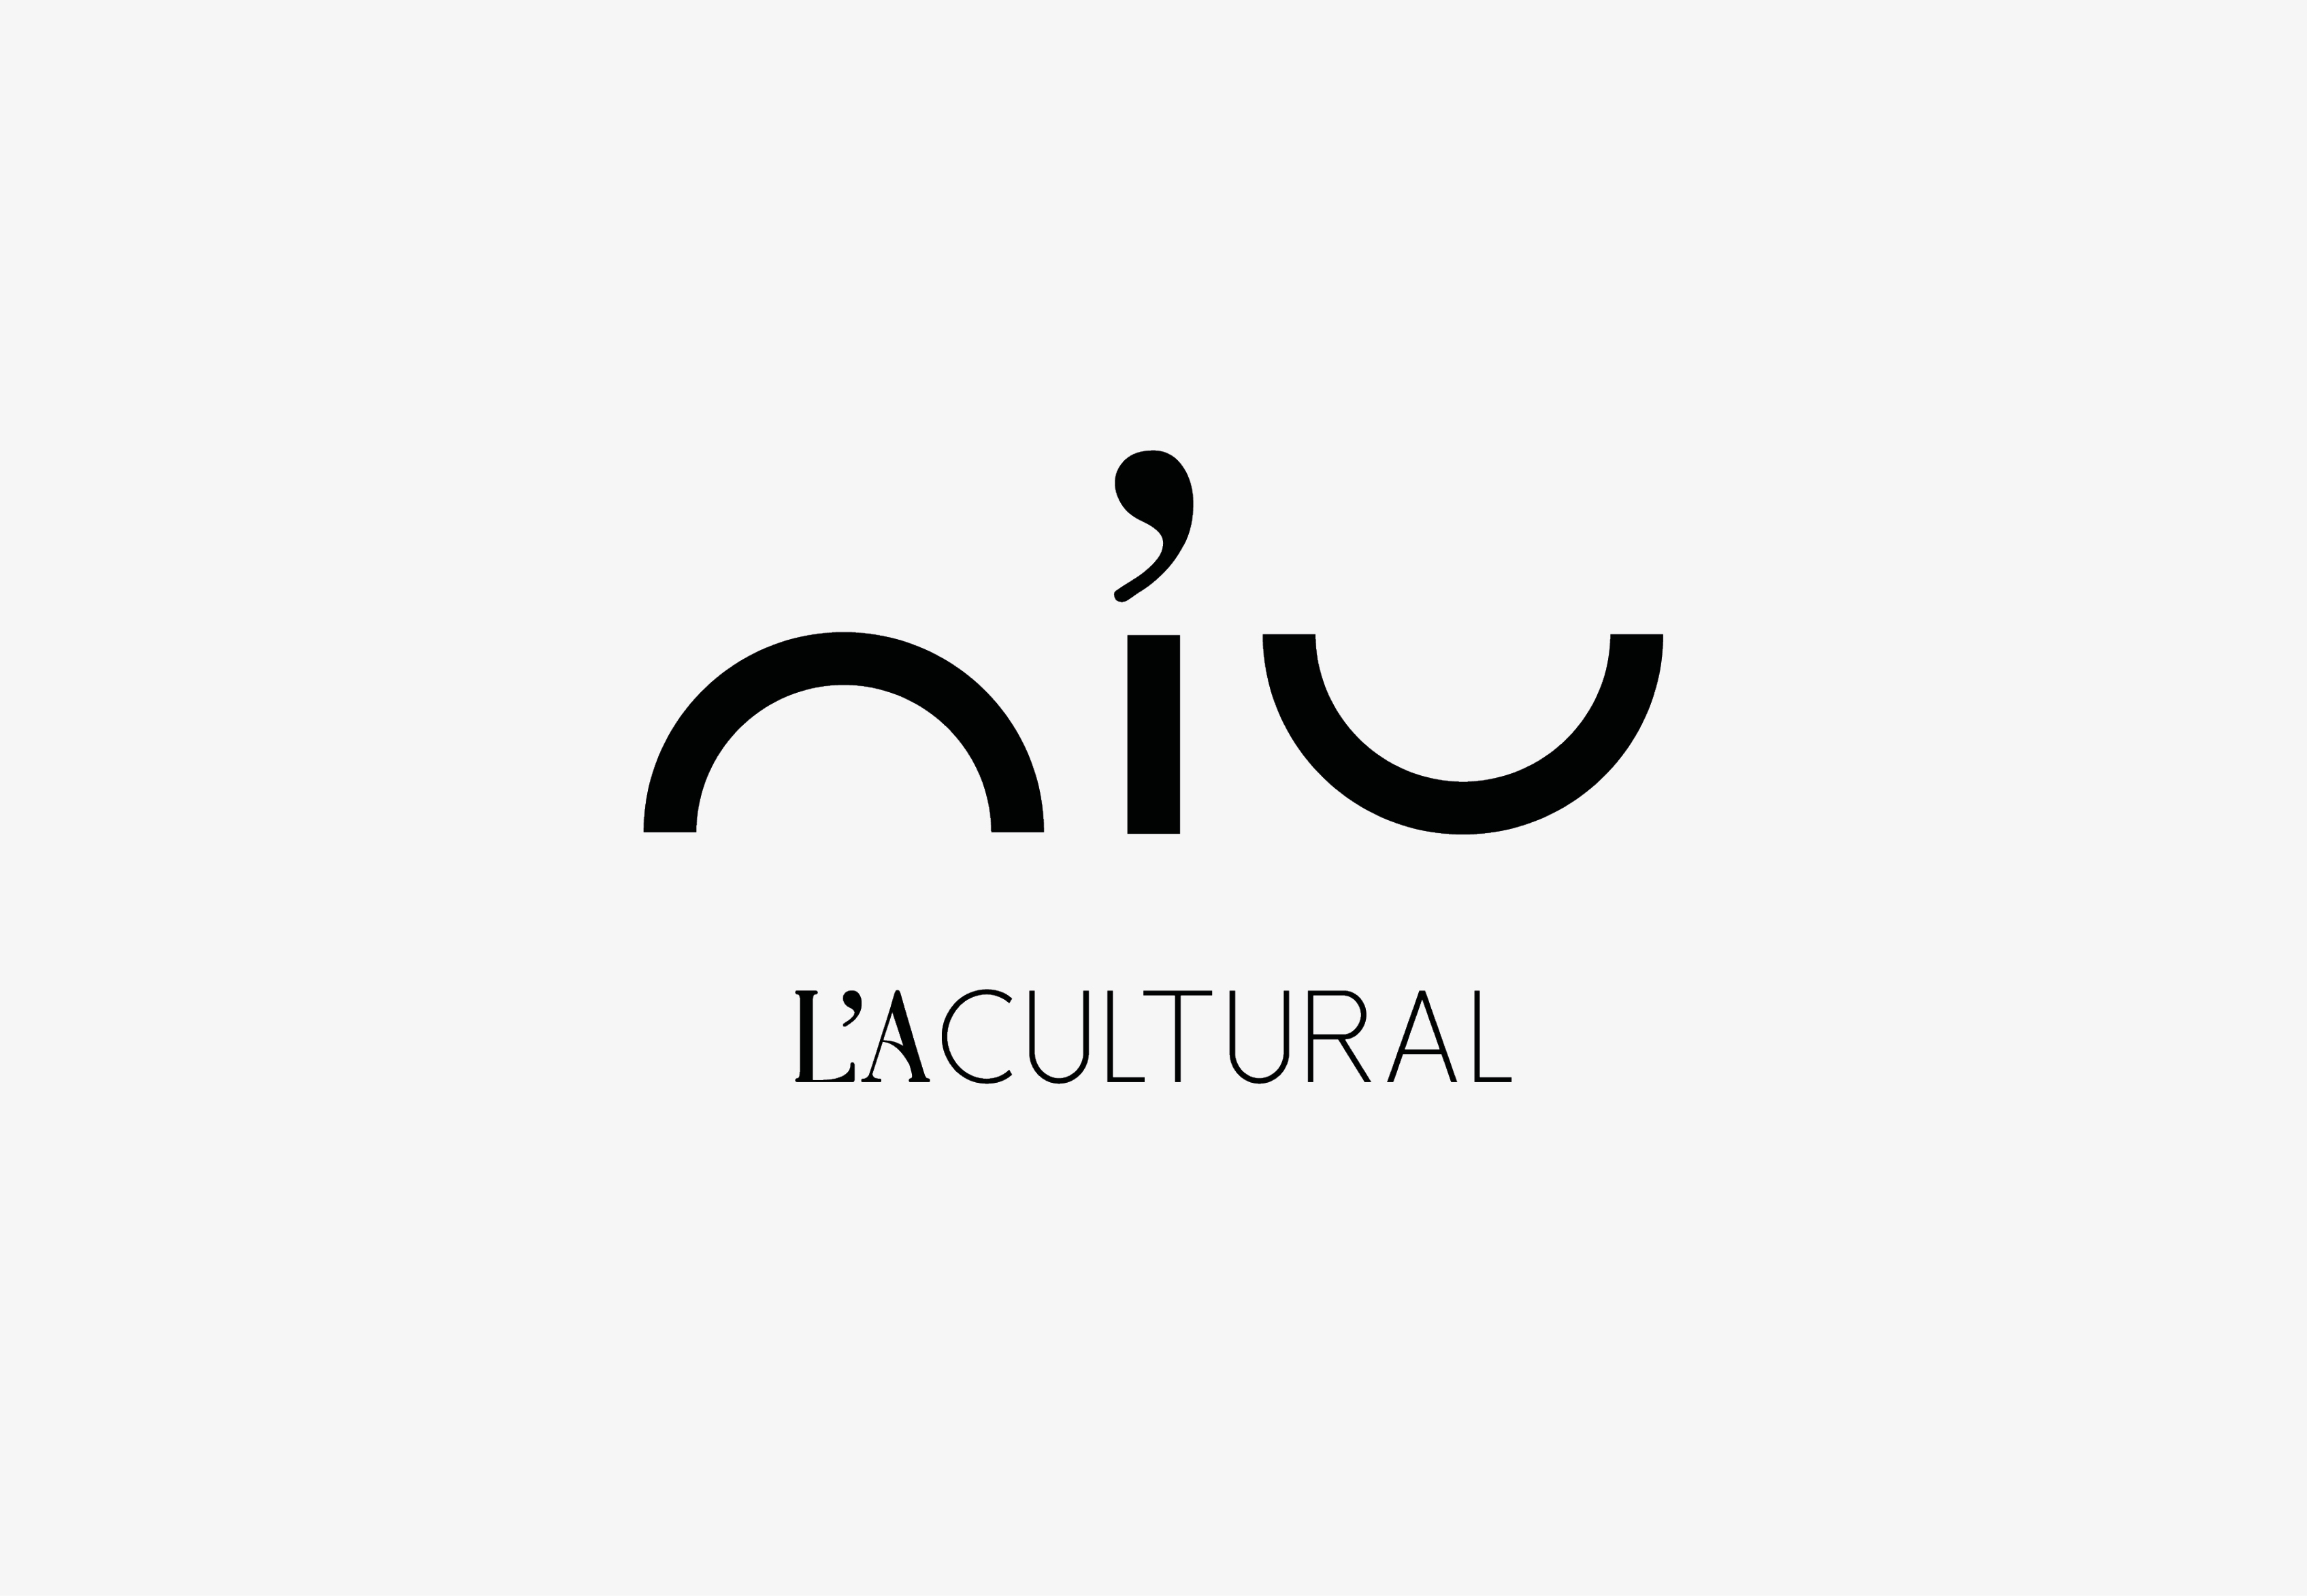 NIU and L'A CULTURA – Logo